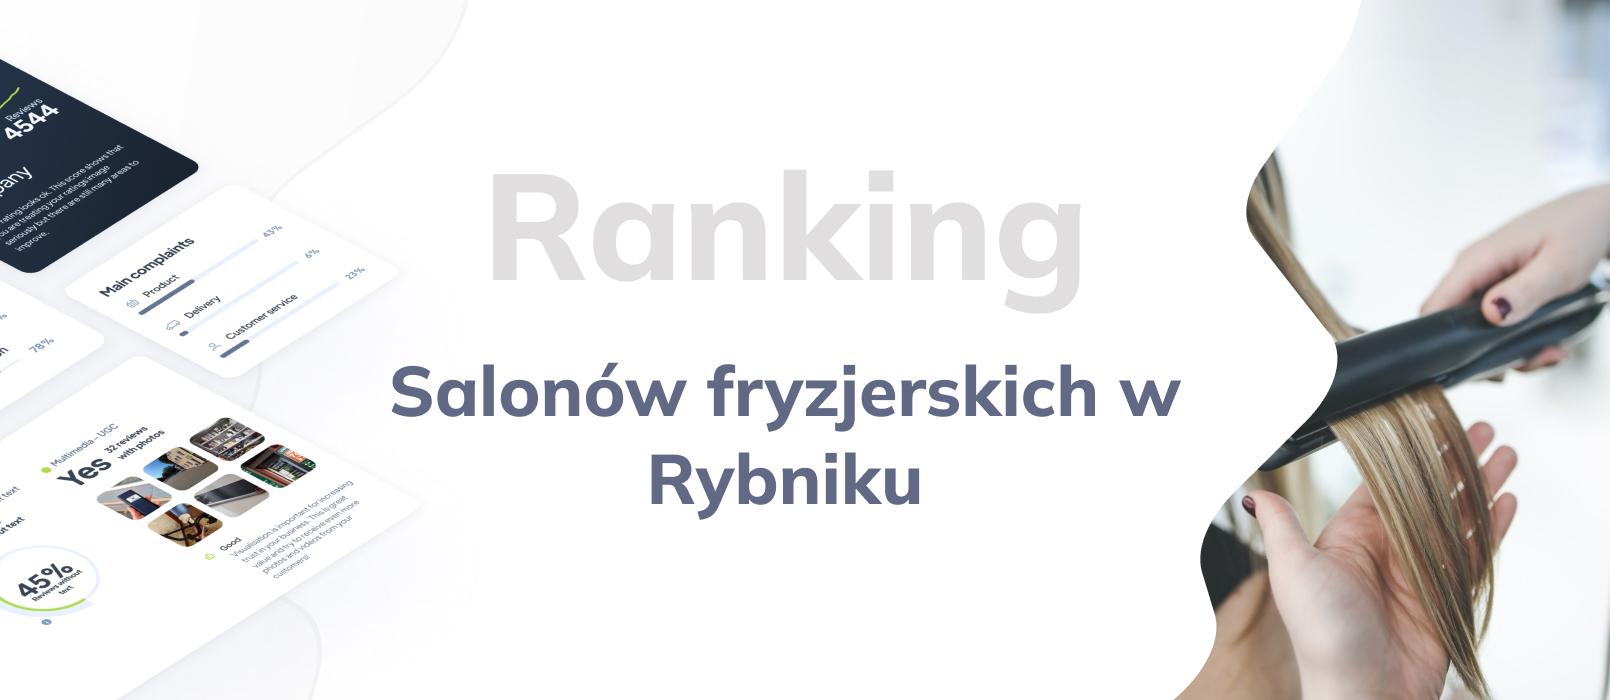 Salon fryzjerski Rybnik - ranking TOP 10